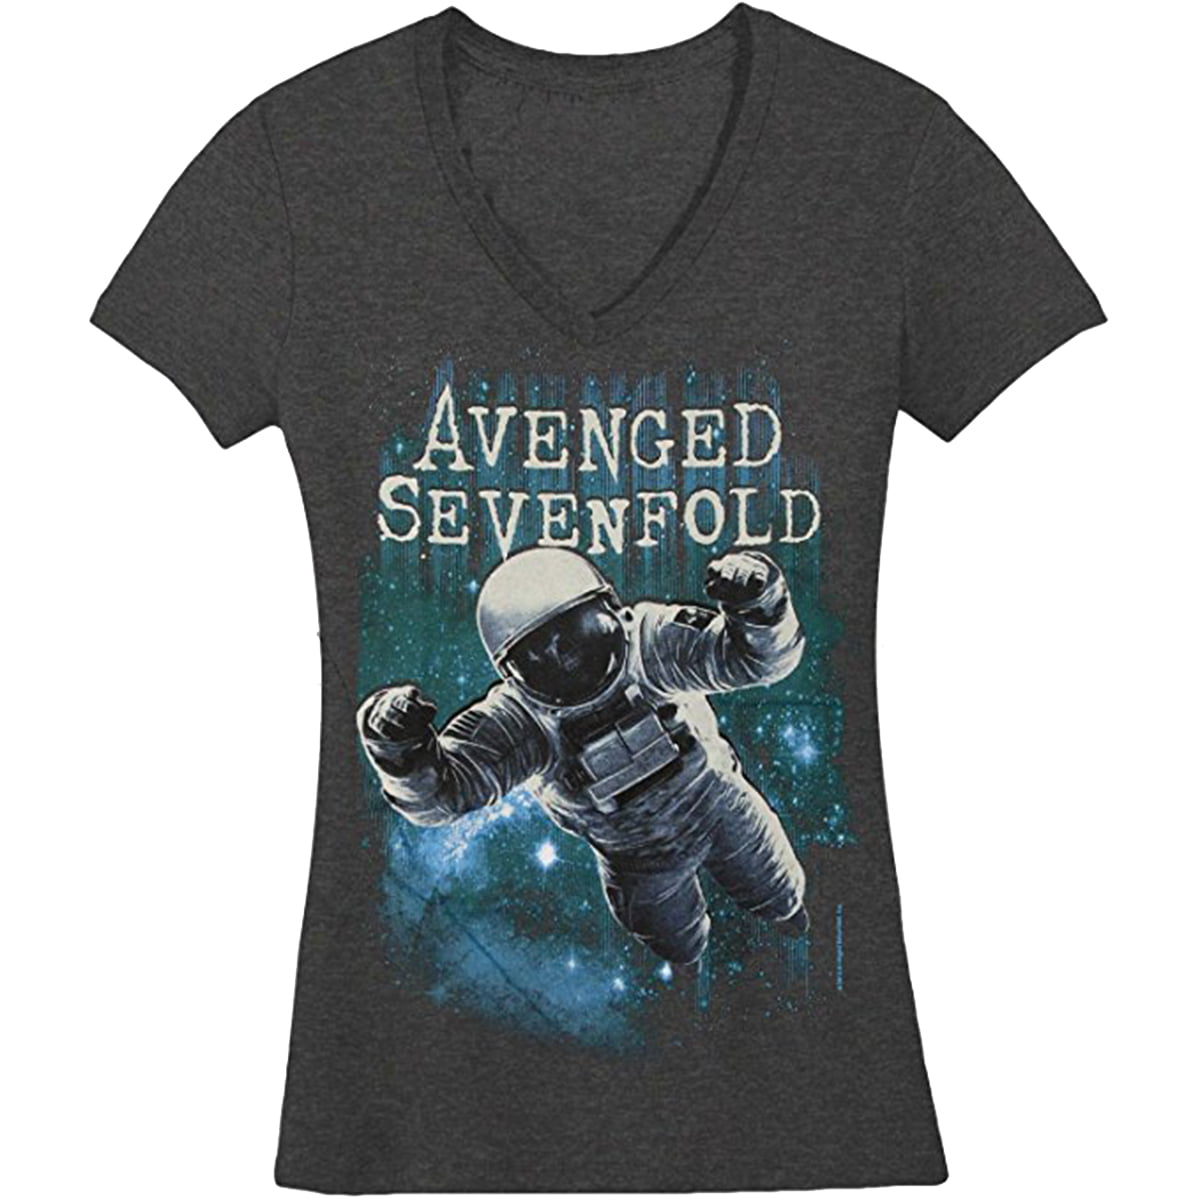 Avenged Sevenfold T Shirt Women Basic Round Neck Short Sleeve Casual Tops Cool T-Shirt 